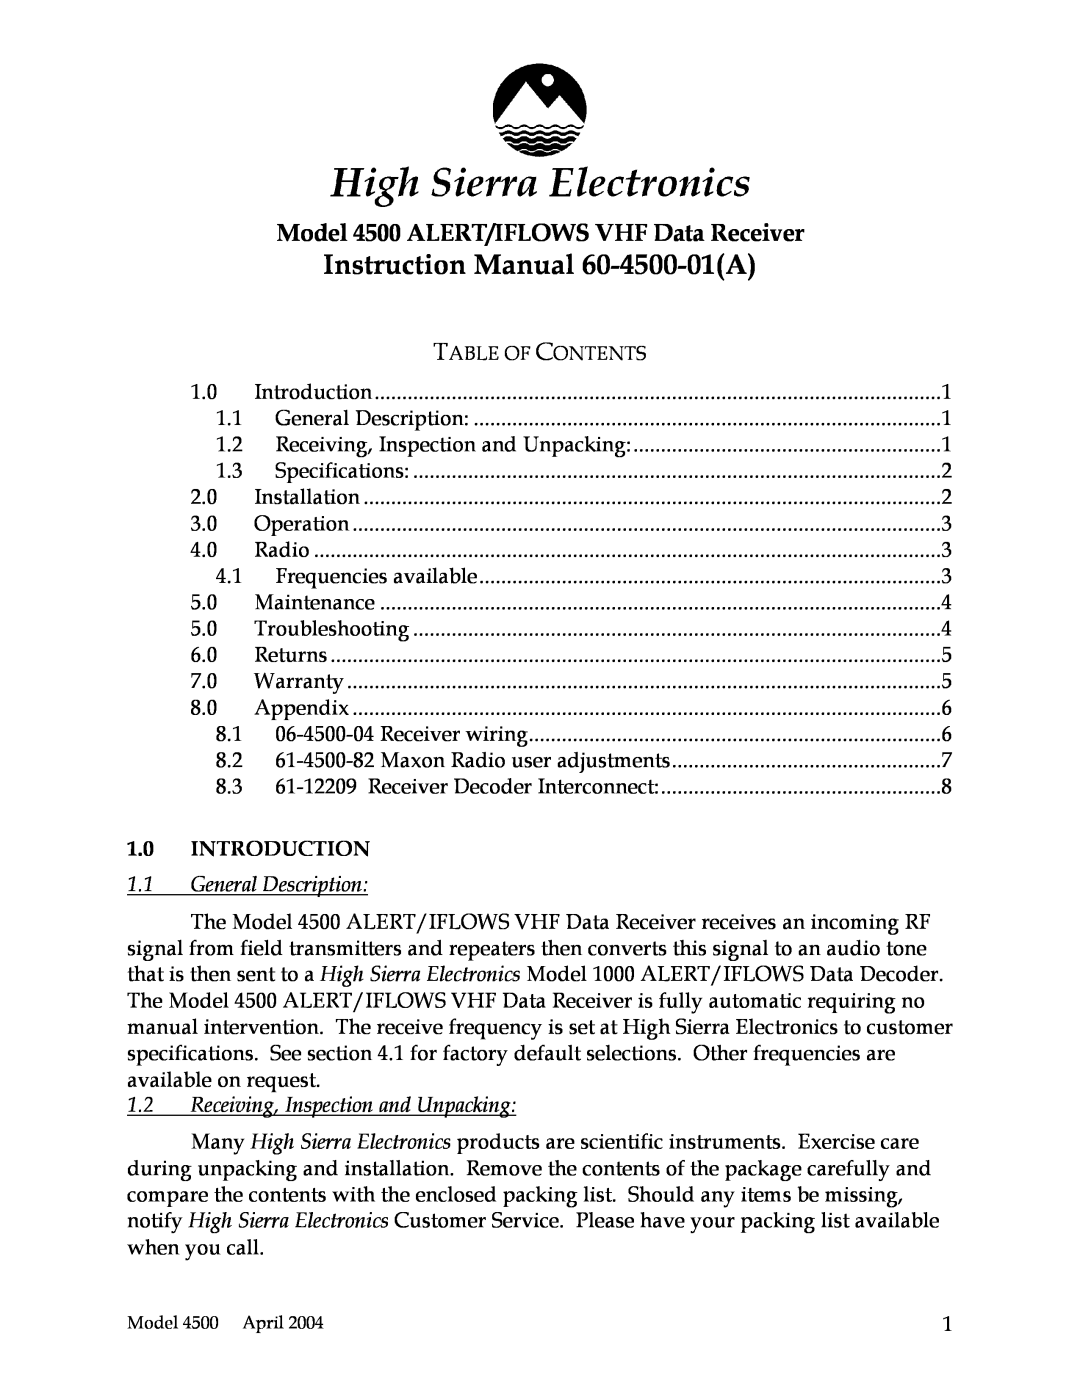 High Sierra Alert/IFlows VHF Data Receiver, 4500 instruction manual 1.0INTRODUCTION, 1.1General Description 